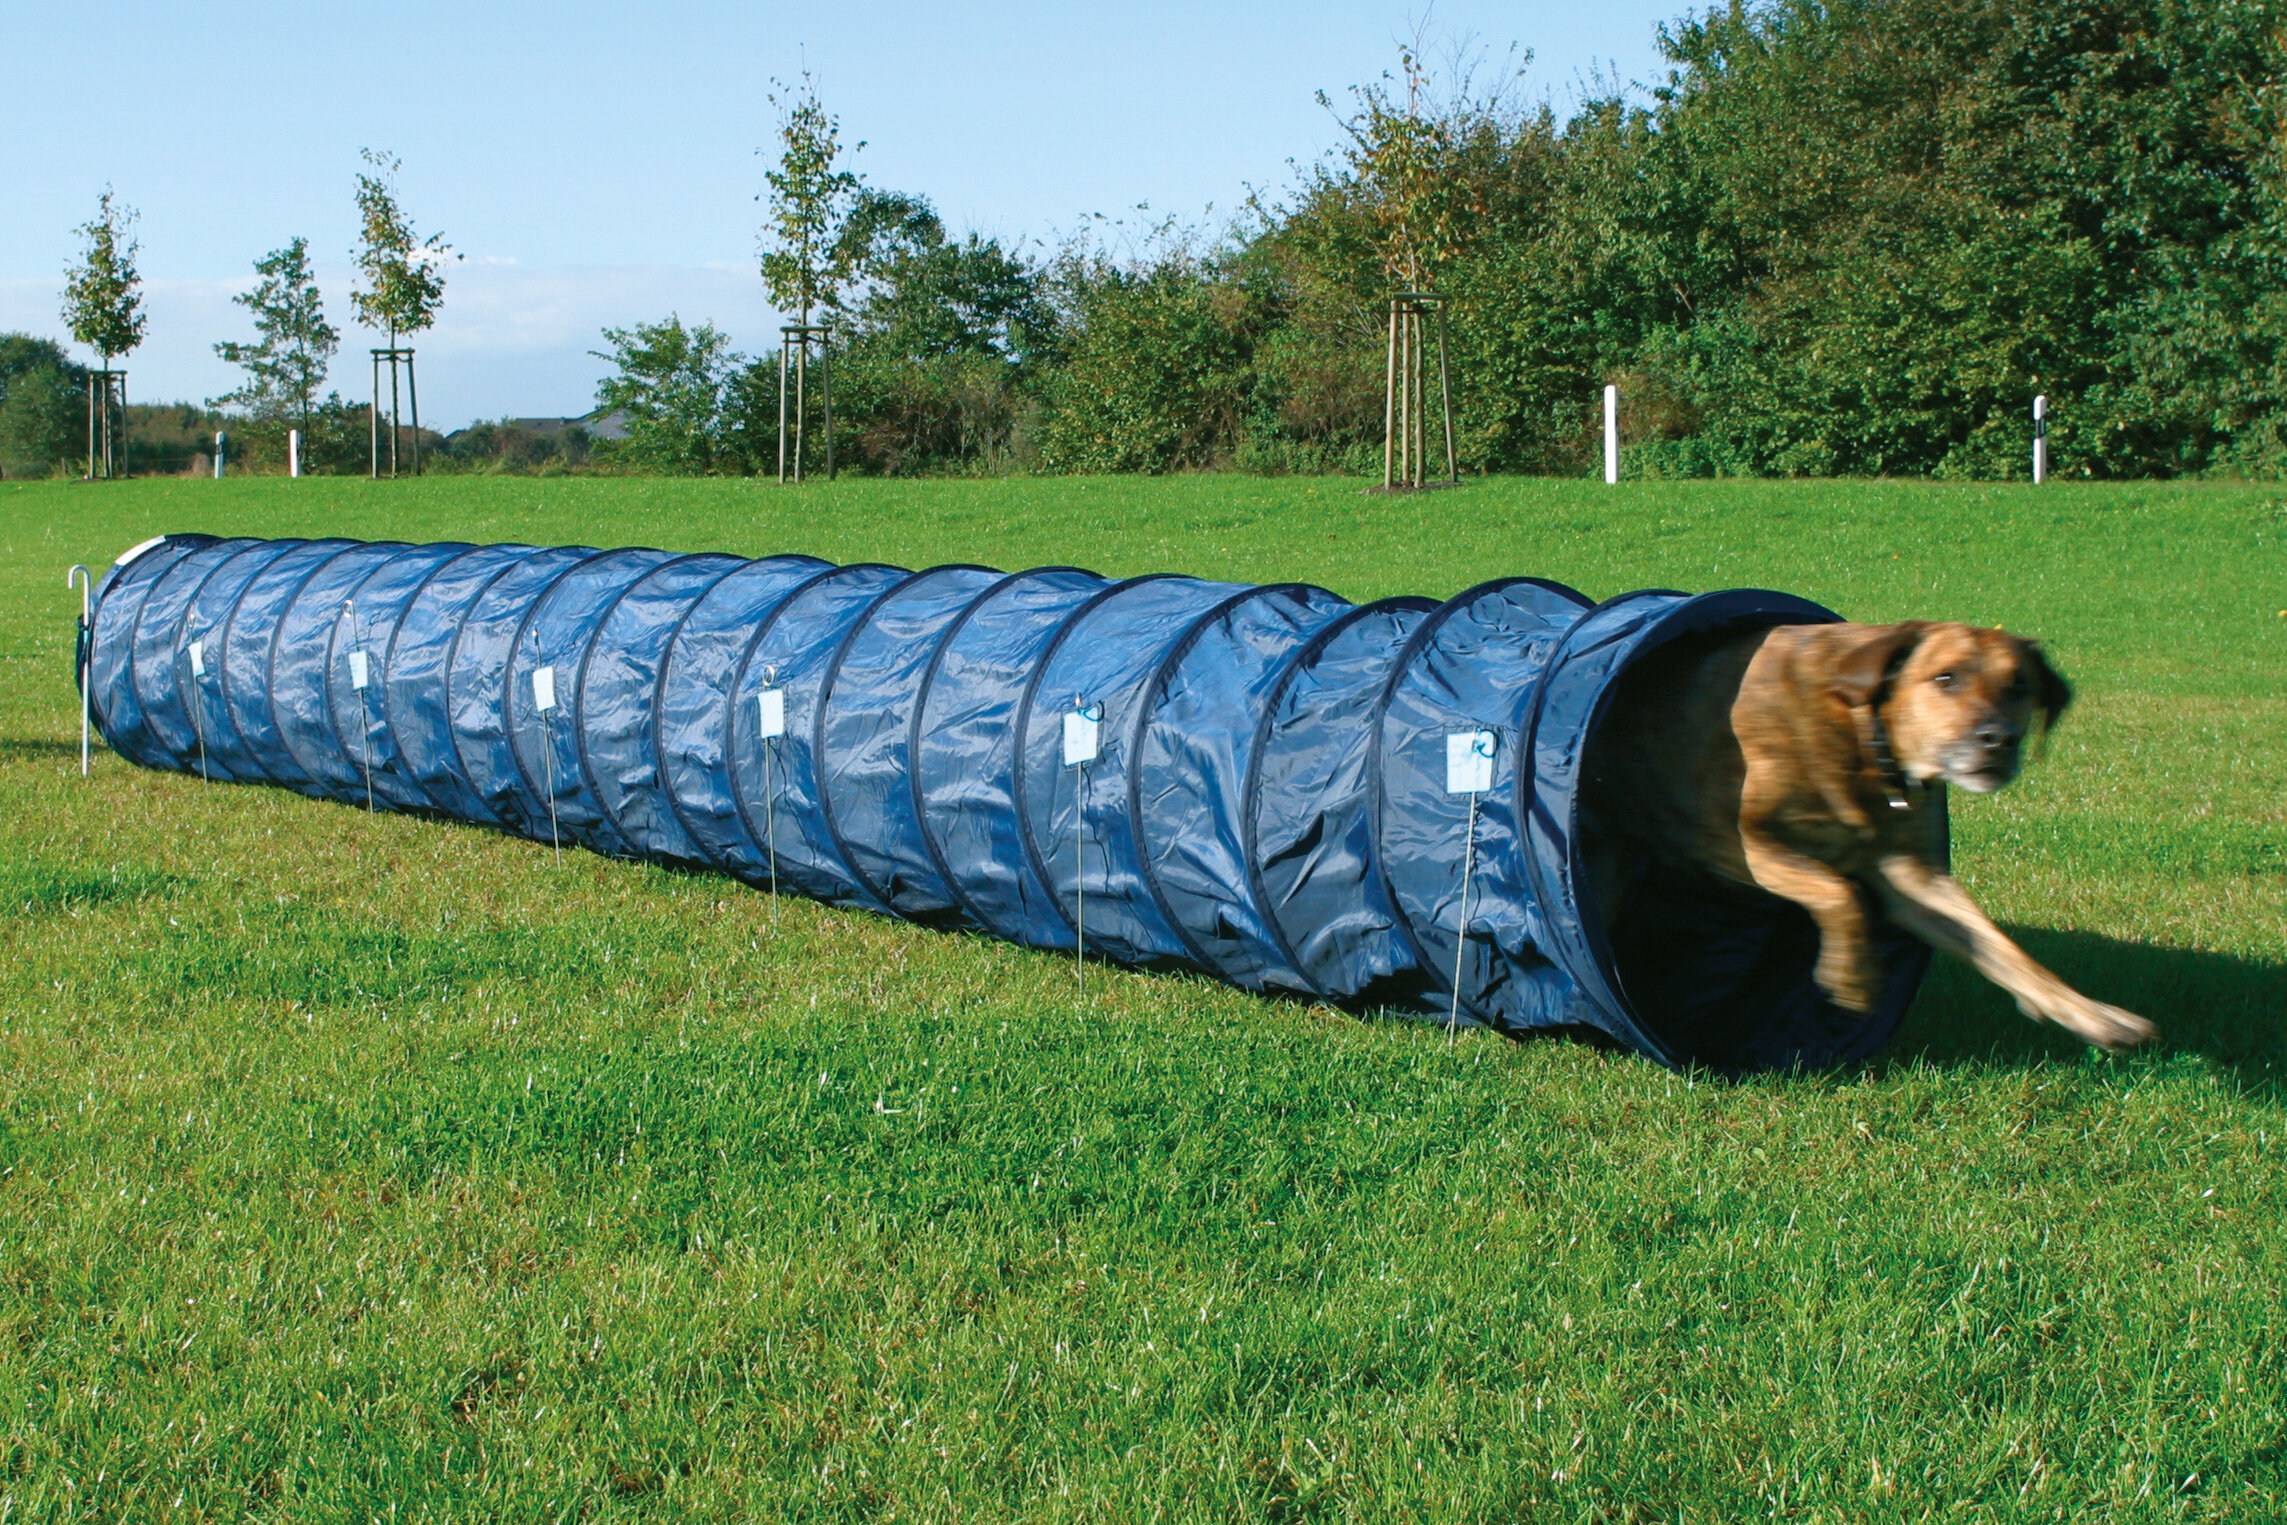 Предметы для дрессировки кошек. Тоннель для собак Trixie Agility Sack tunnel 500х60х60 см. Аджилити Trixie. Туннель для собак аджилити. Тоннель для аджилити.